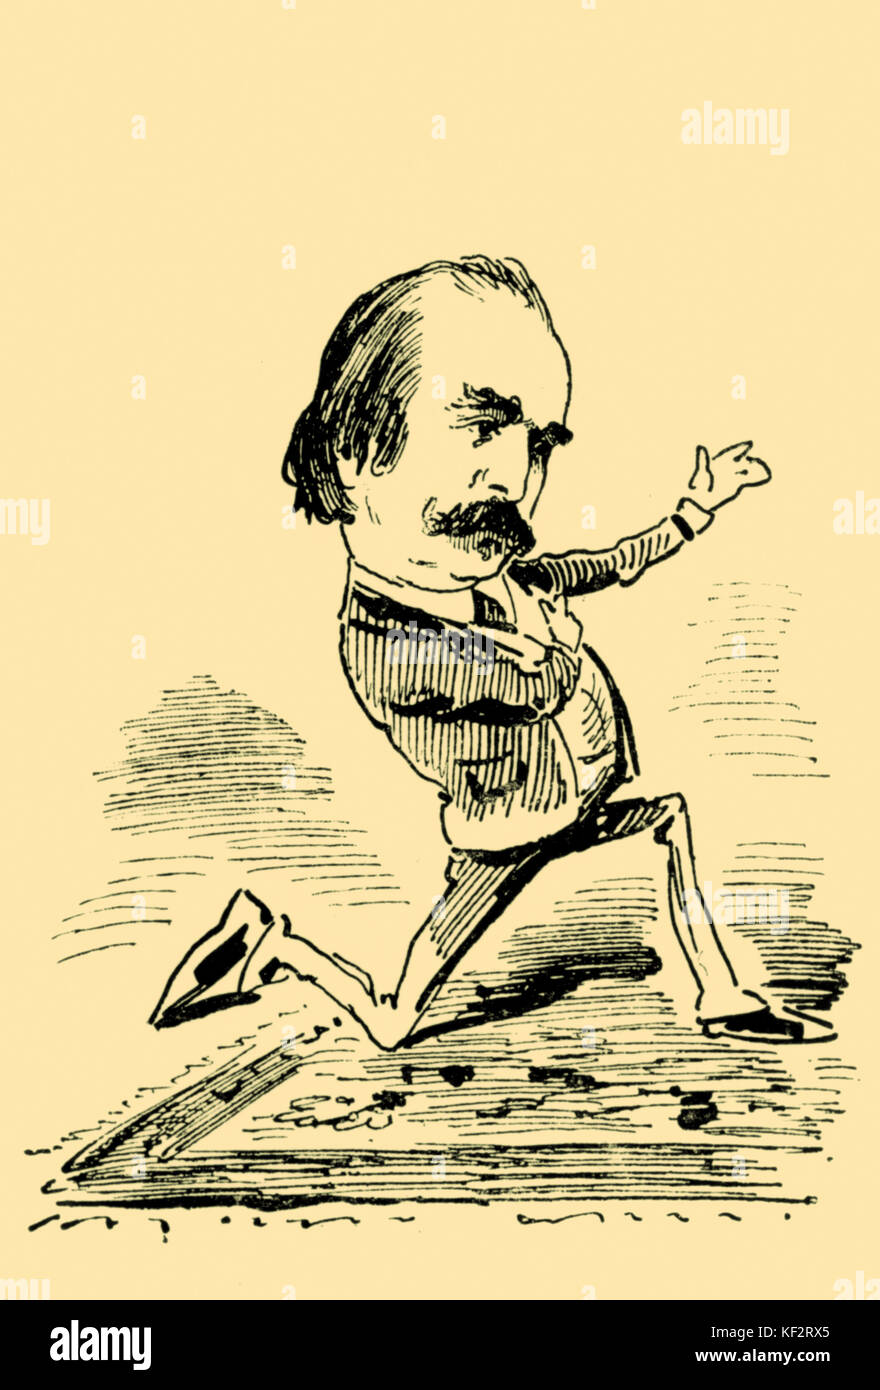 HANSLICK, Eduard - caricature - in supplicant position - Austrian music critic, 1825-1904 Stock Photo